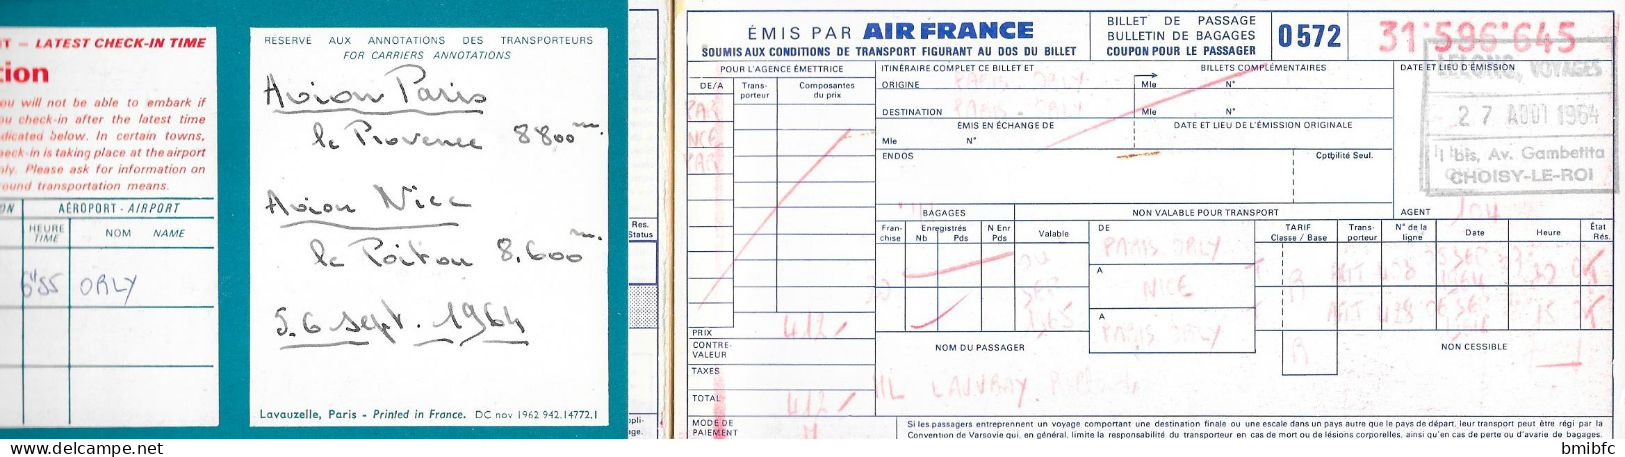 AIR FRANCE 2 Billets N° 31 596 646 Et 31 596 645 - PARIS ORLY - NICE - PARIS ORLY Du 27 Août 1964 - Europe